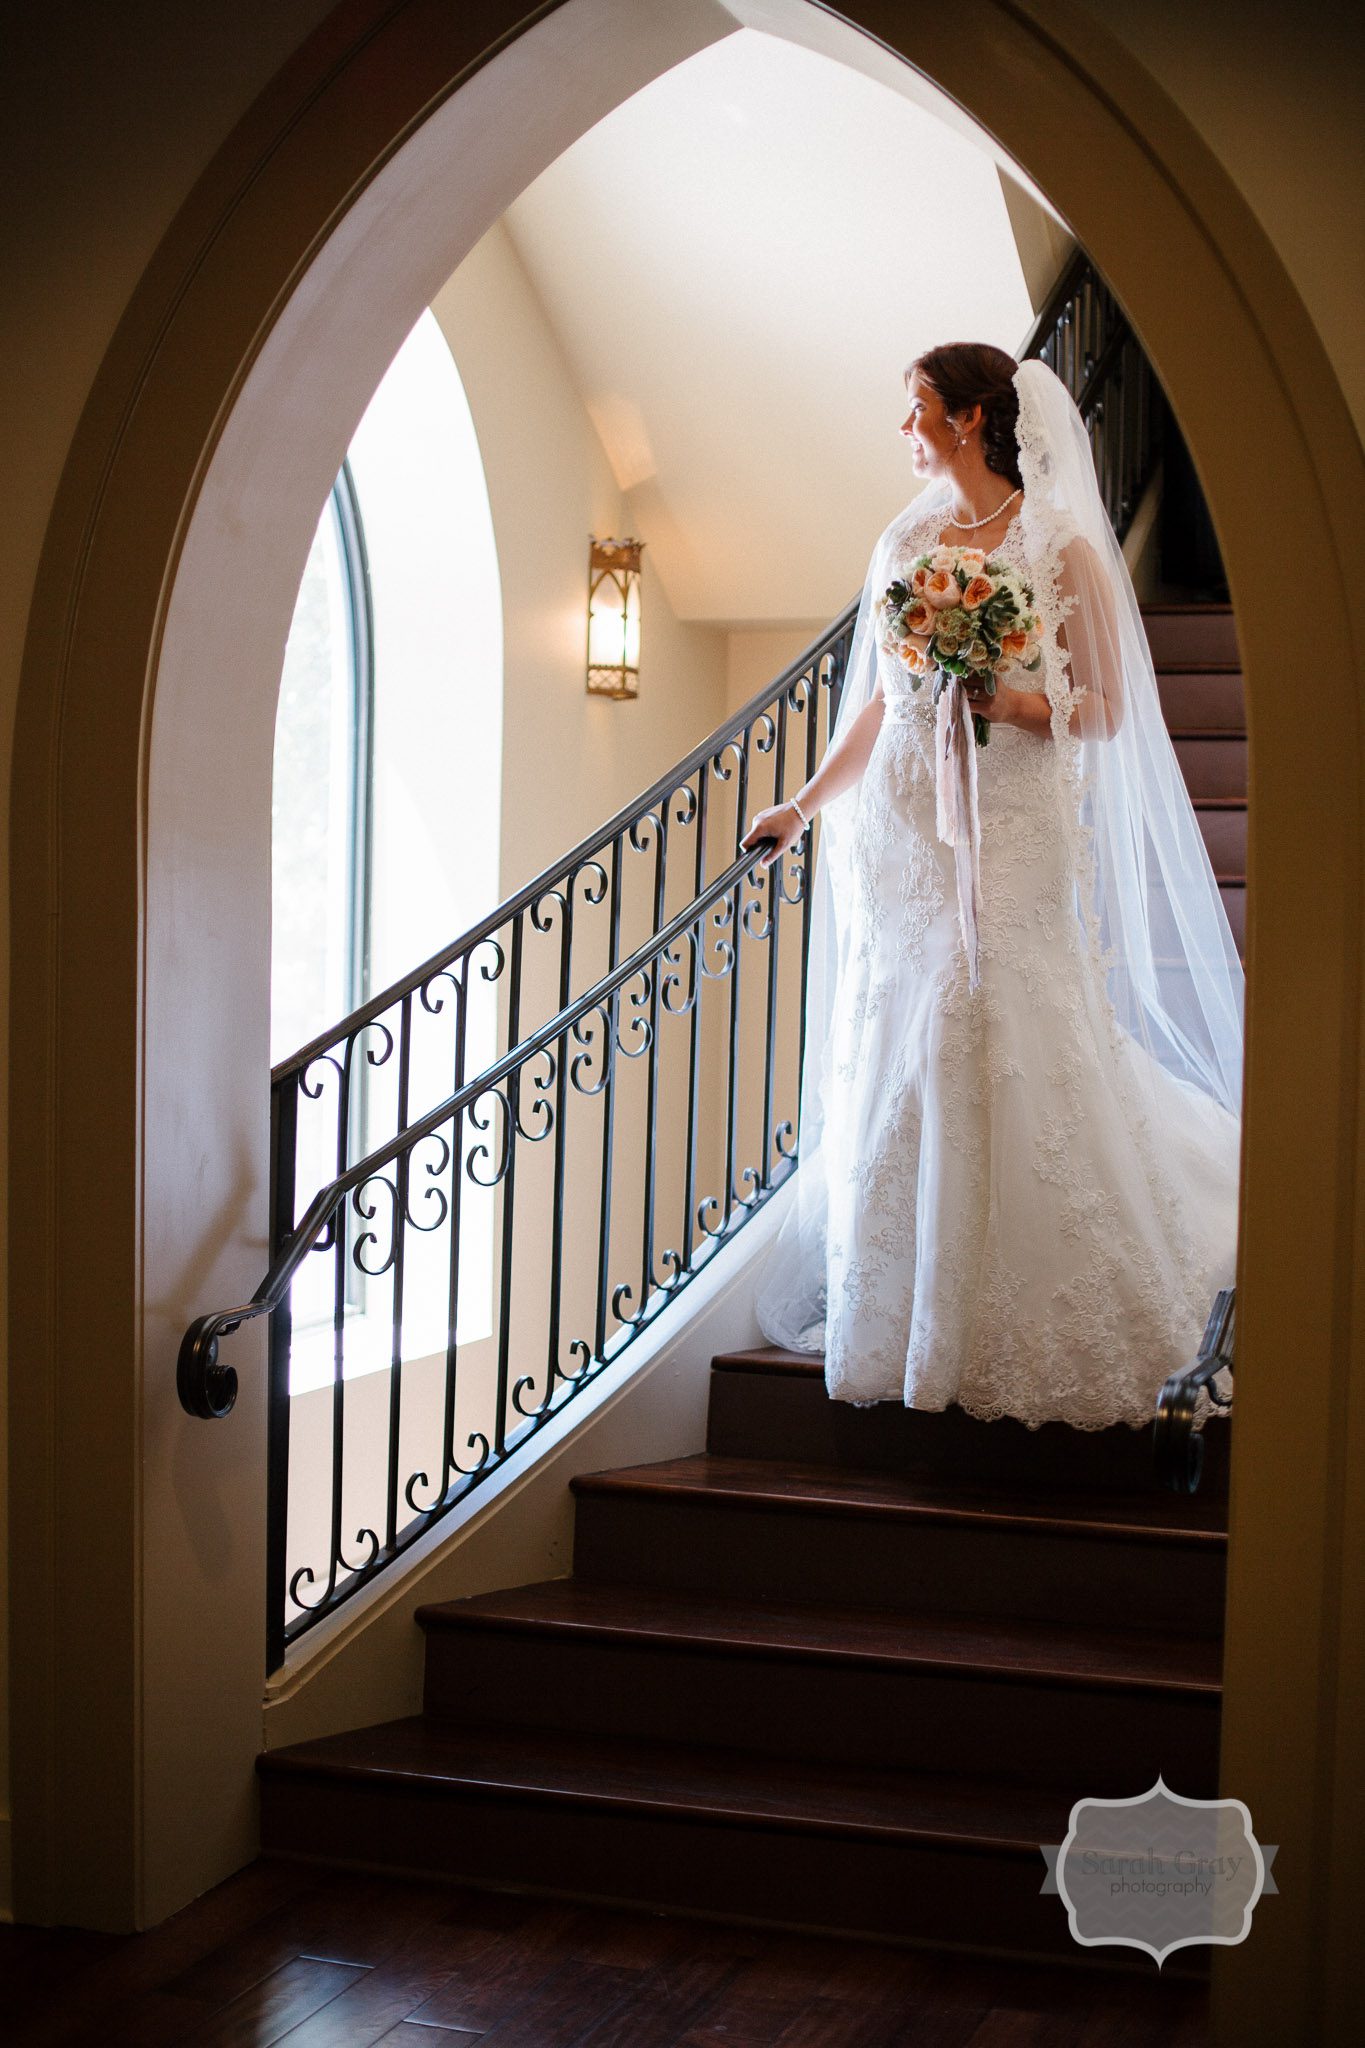 Sarah Gray Photography | Tallahassee Florida Wedding Photographer